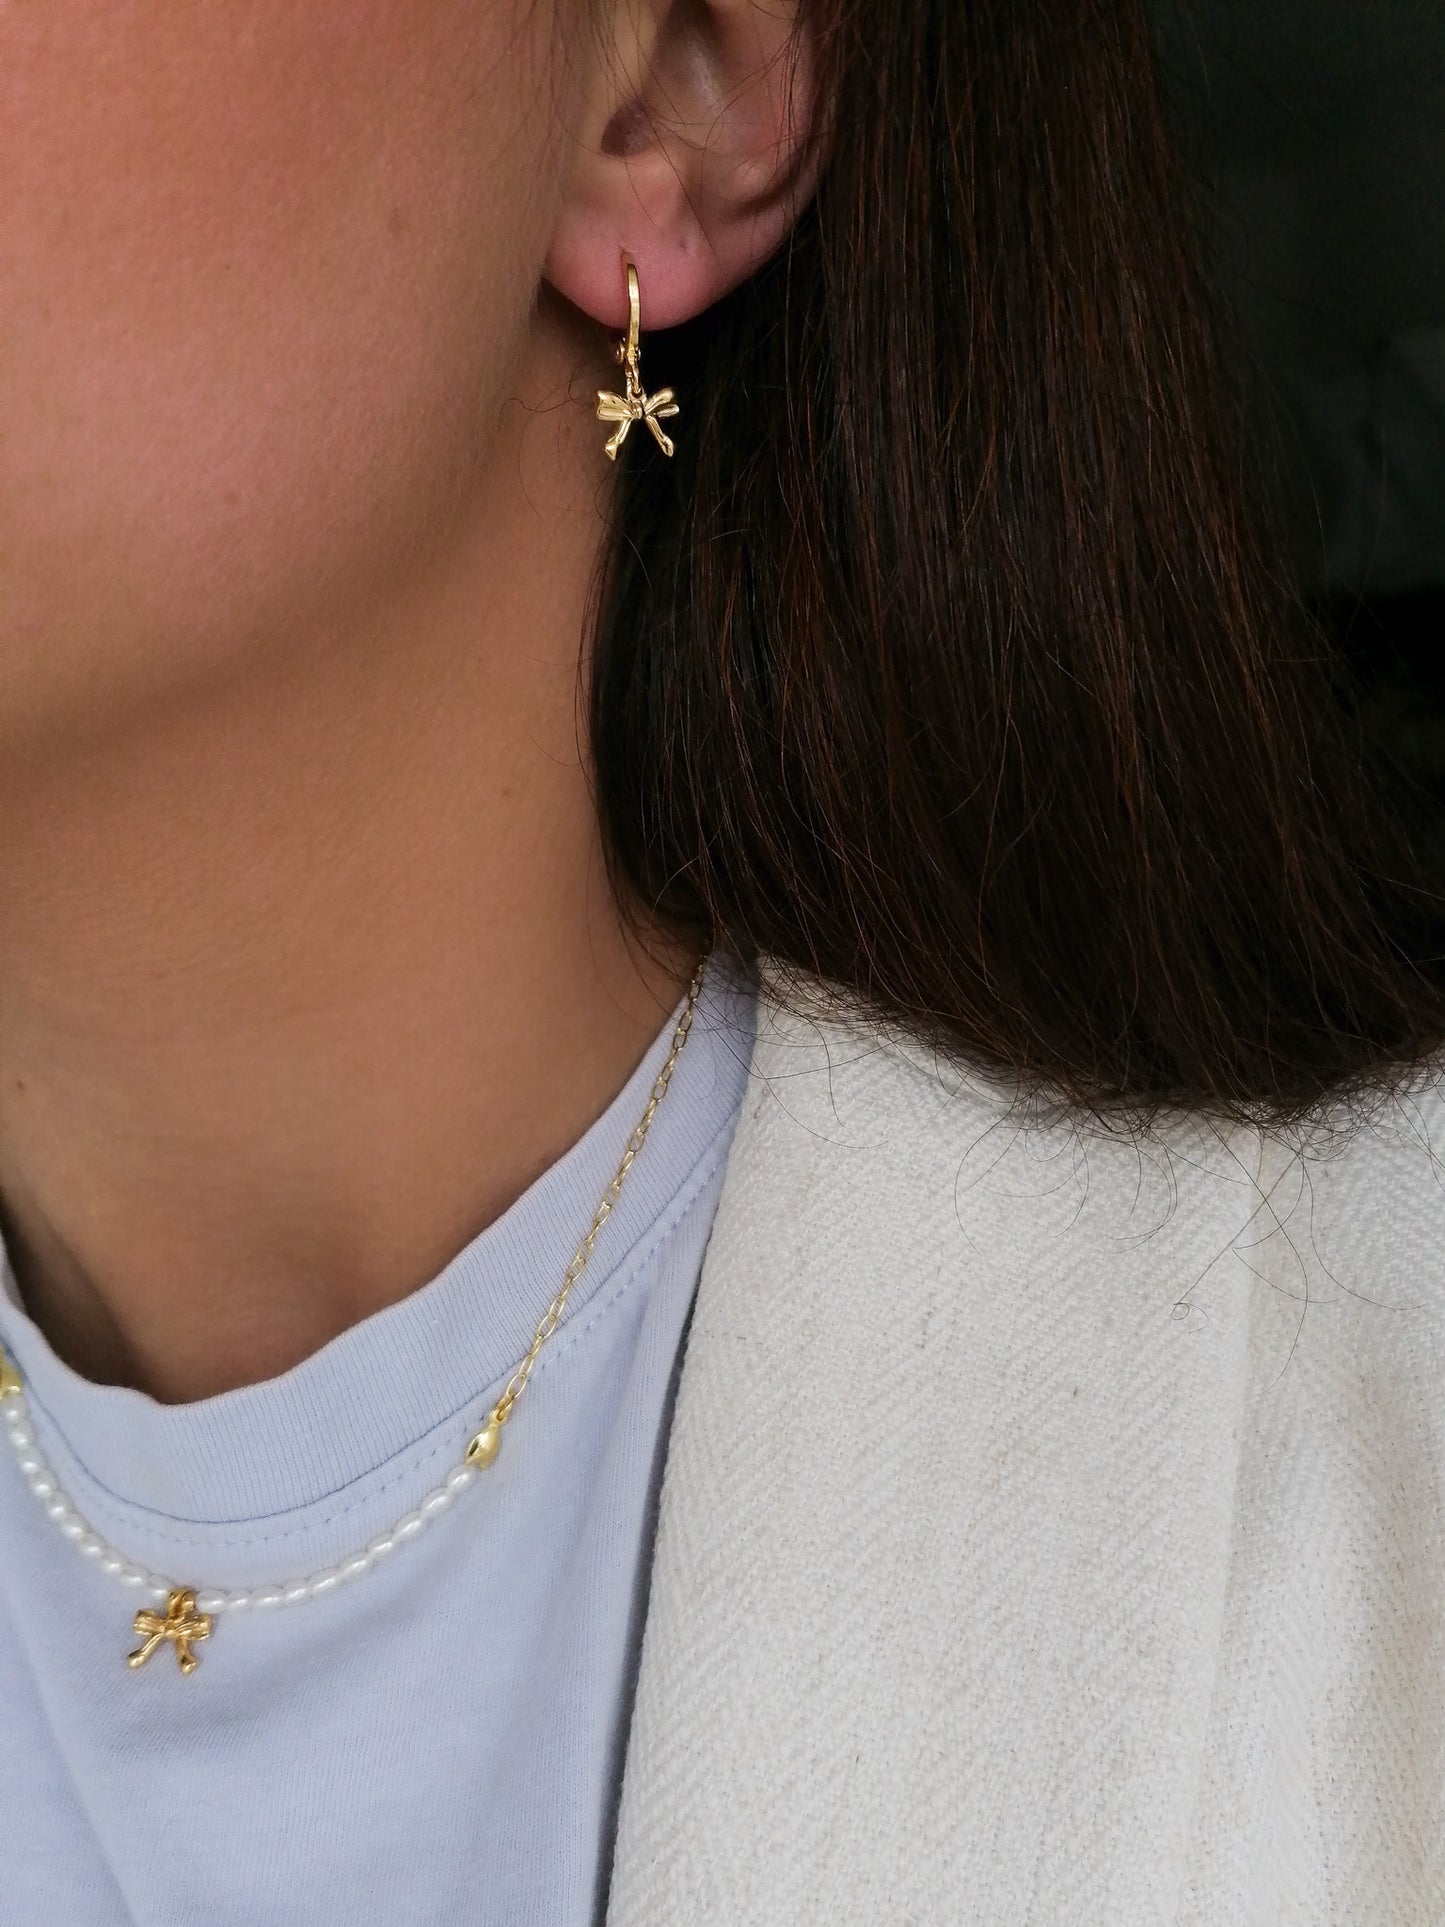 Little bow earrings - gold filled